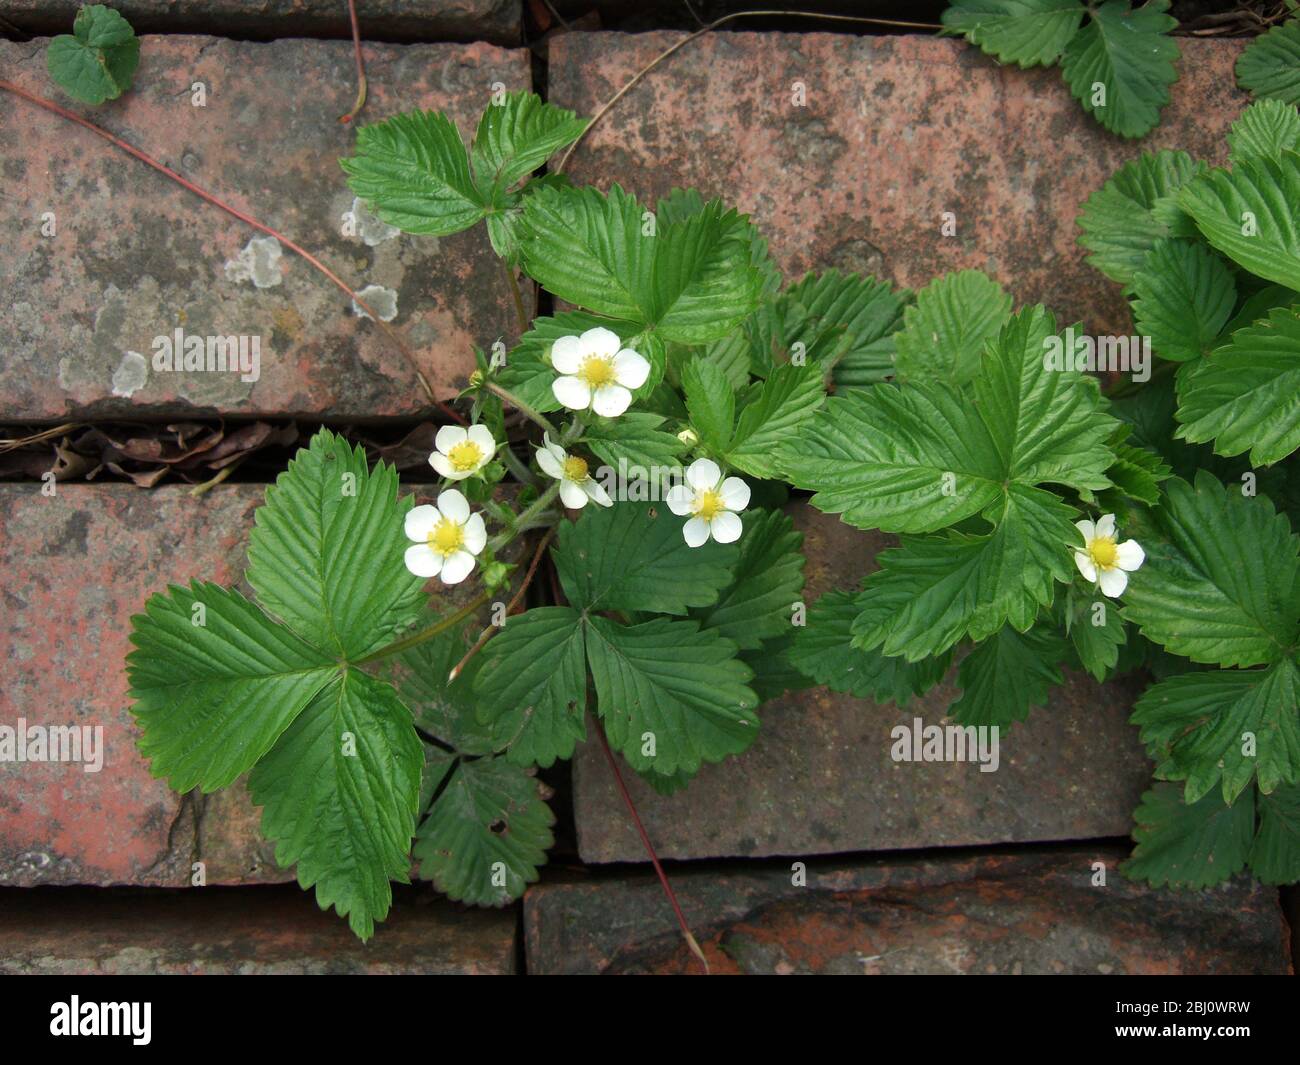 Wild strawberry plants flowering on brick path - Stock Photo